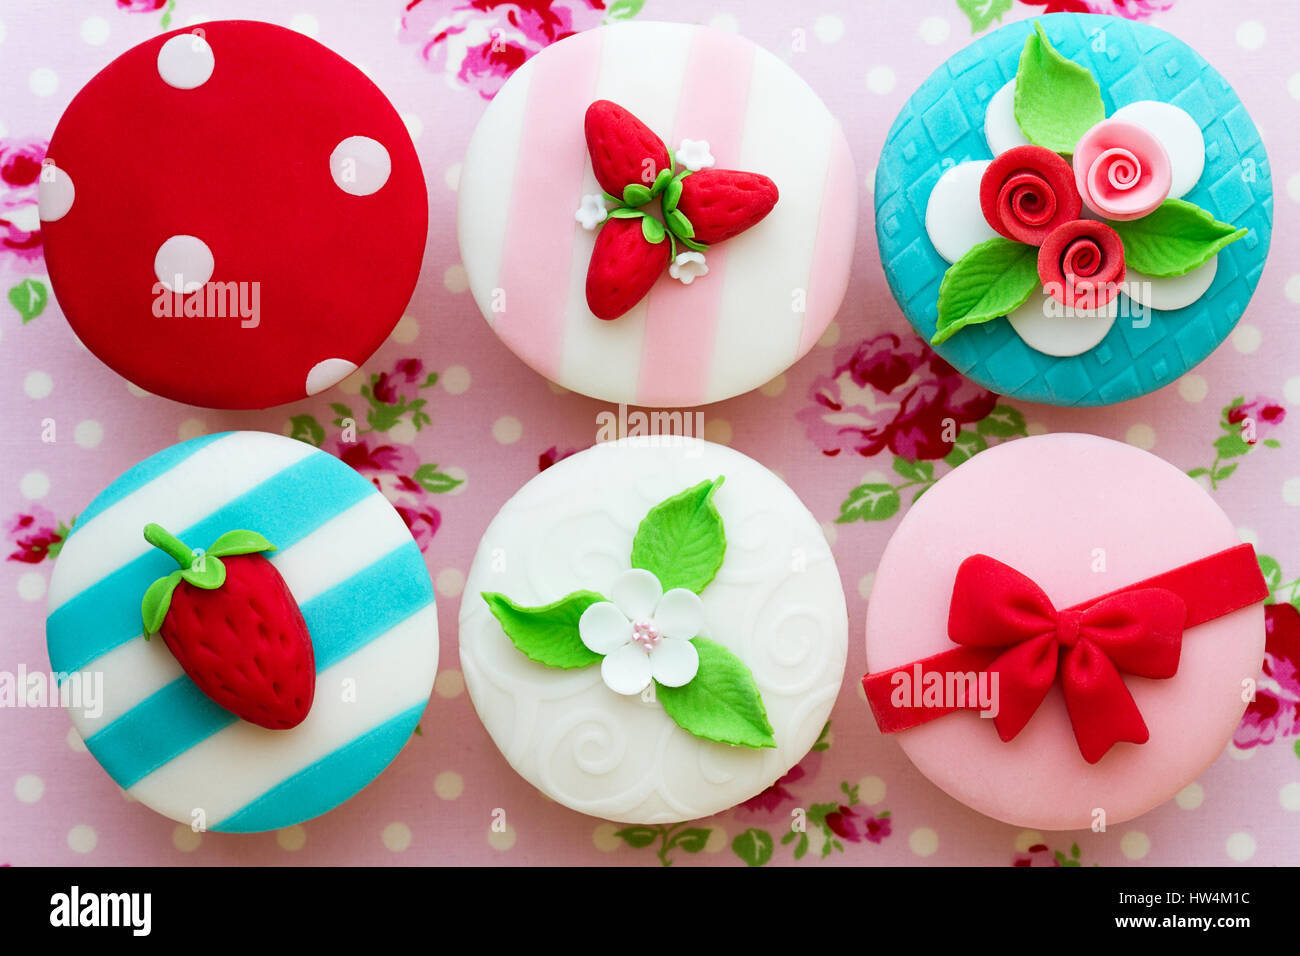 Cupcakes mit einem Sommer-Thema Stockfoto